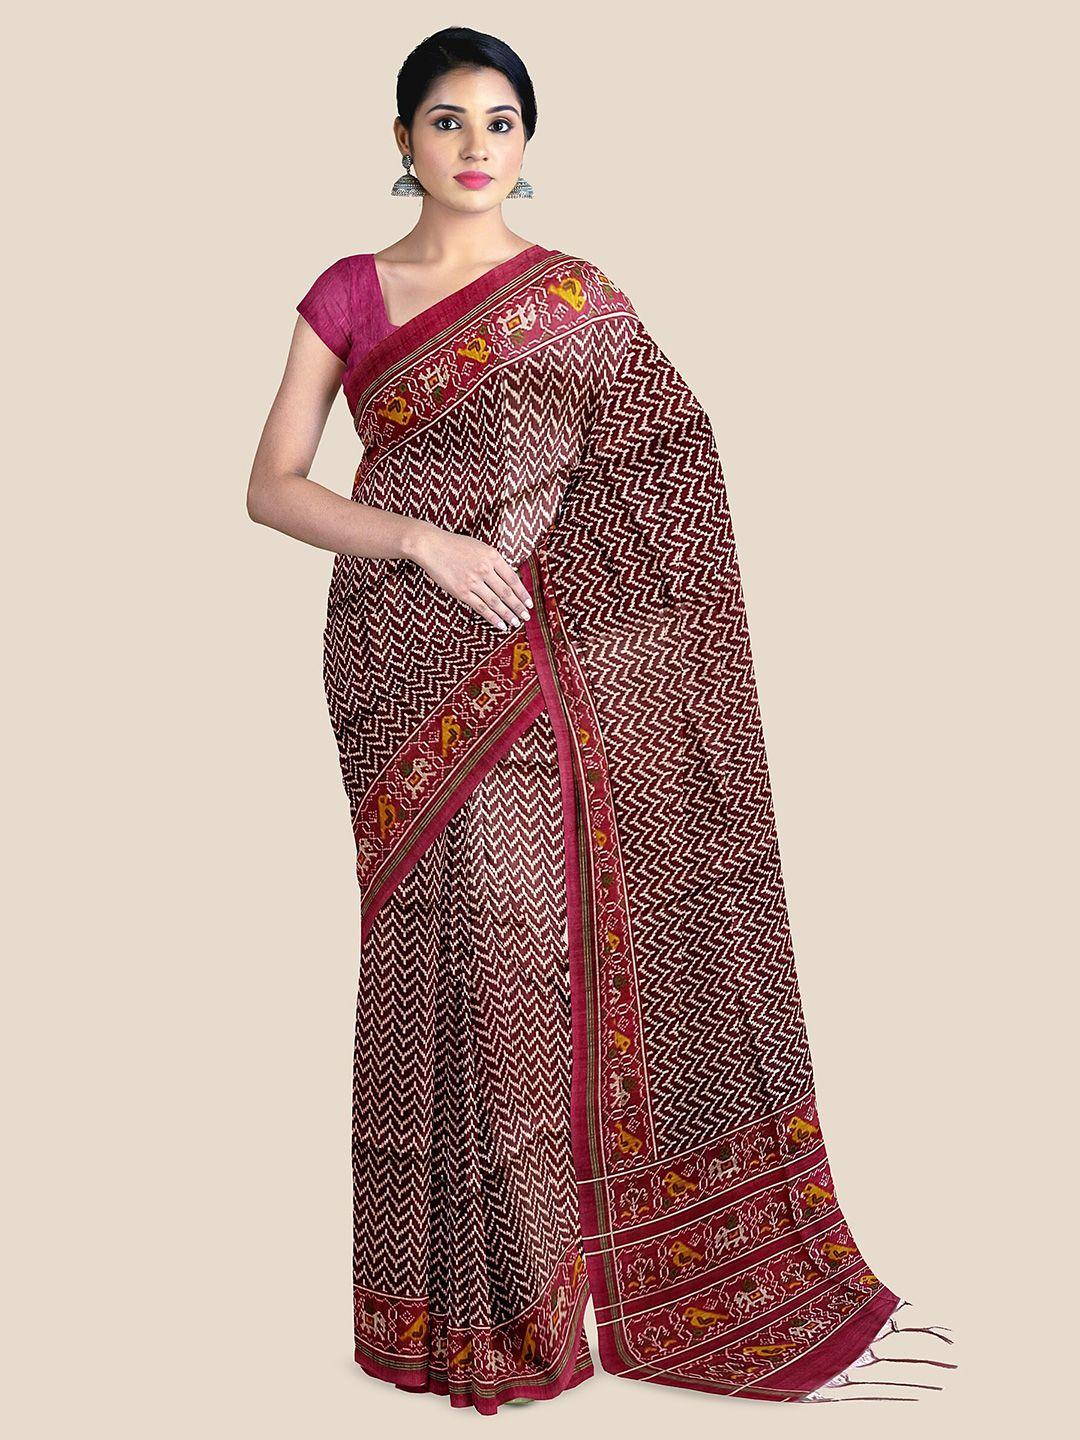 The Chennai Silks Woven Design Saree